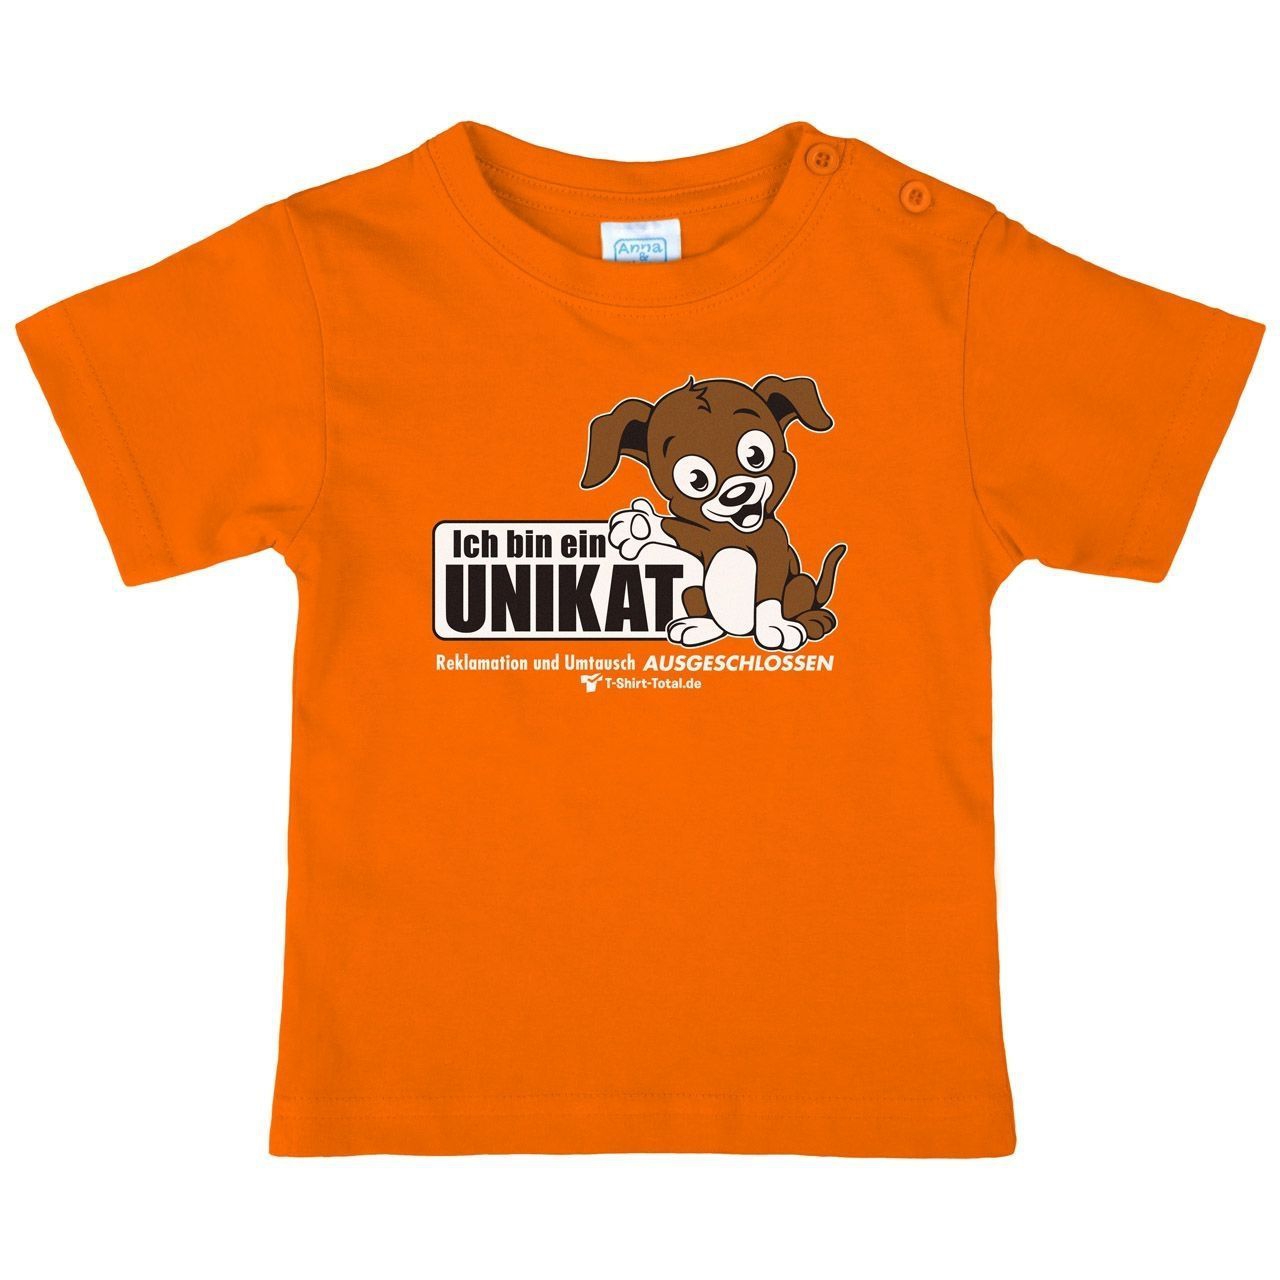 Unikat Kinder T-Shirt orange 98